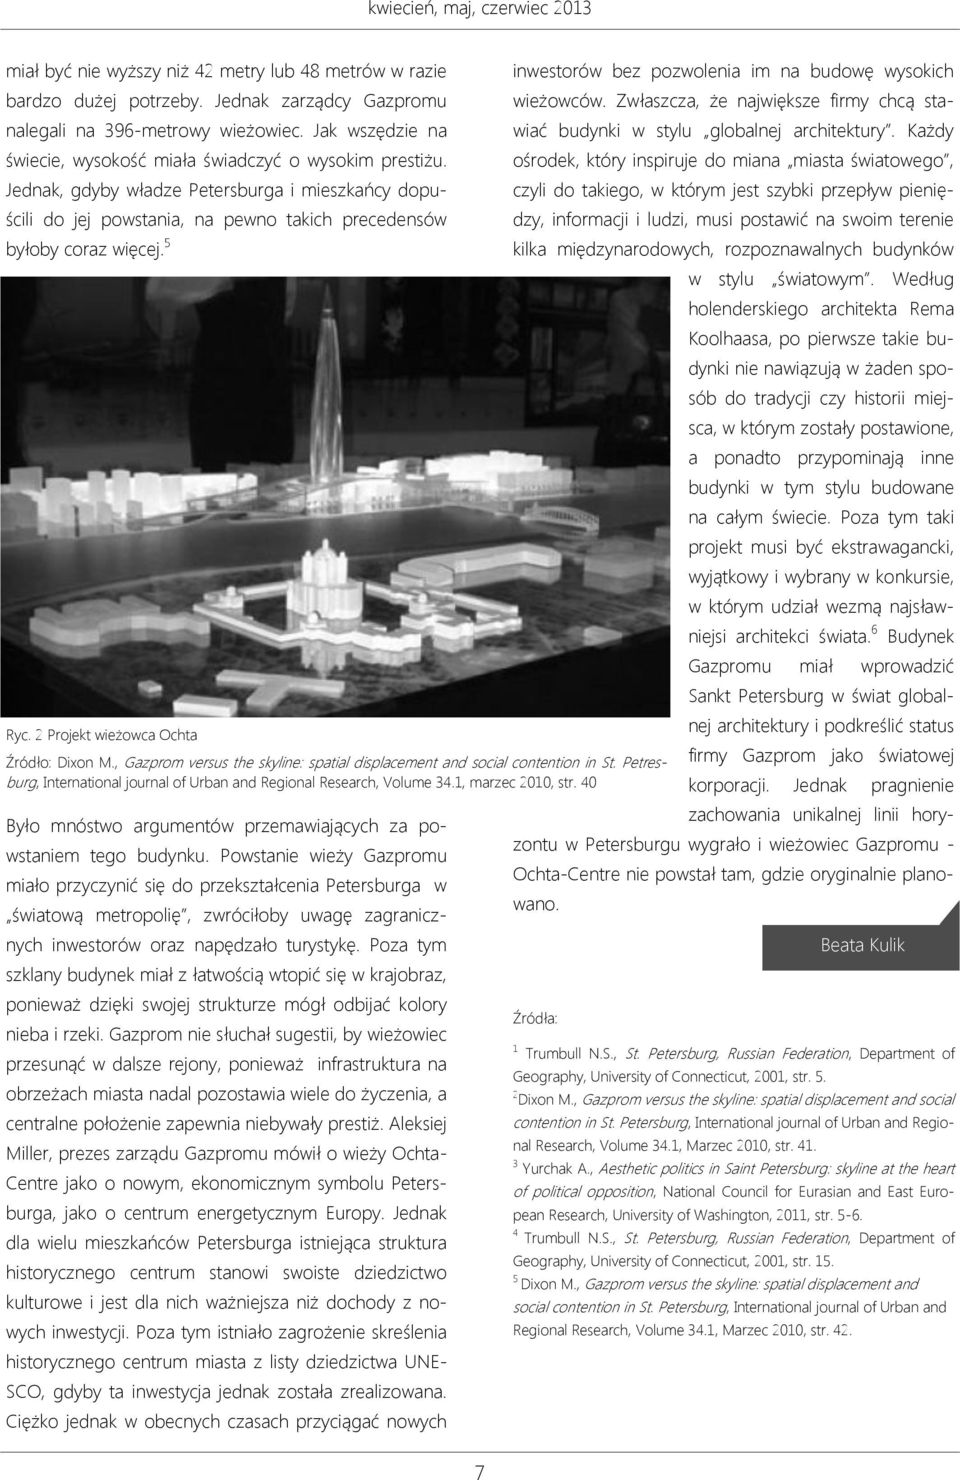 2 Projekt wieżowca Ochta Źródło: Dixon M., Gazprom versus the skyline: spatial displacement and social contention in St. Petresburg, International journal of Urban and Regional Research, Volume 34.